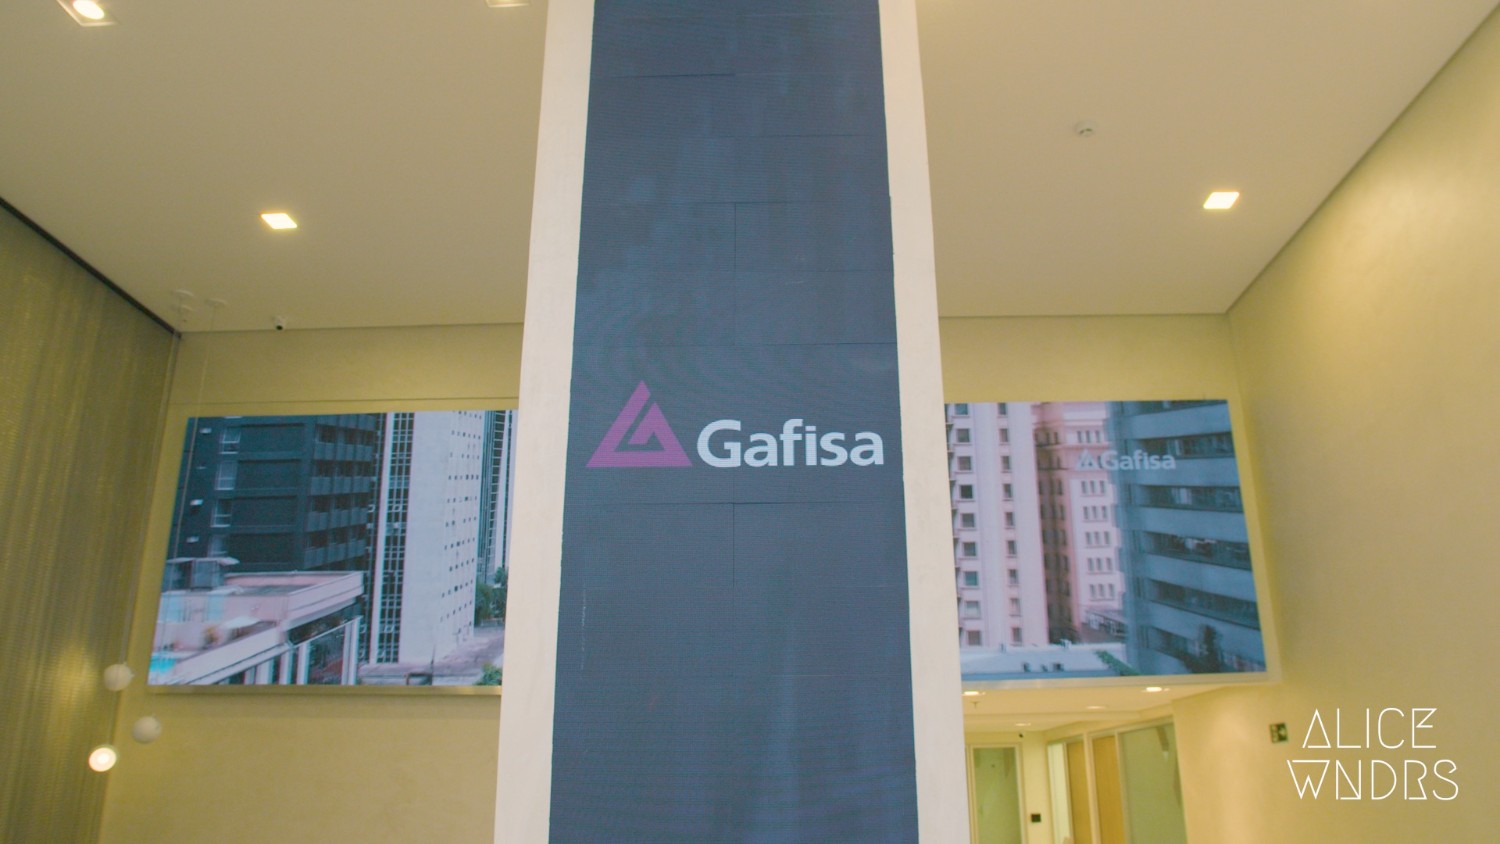 Gafisa - Gafisa: painéis LED e mesas interativas - 3